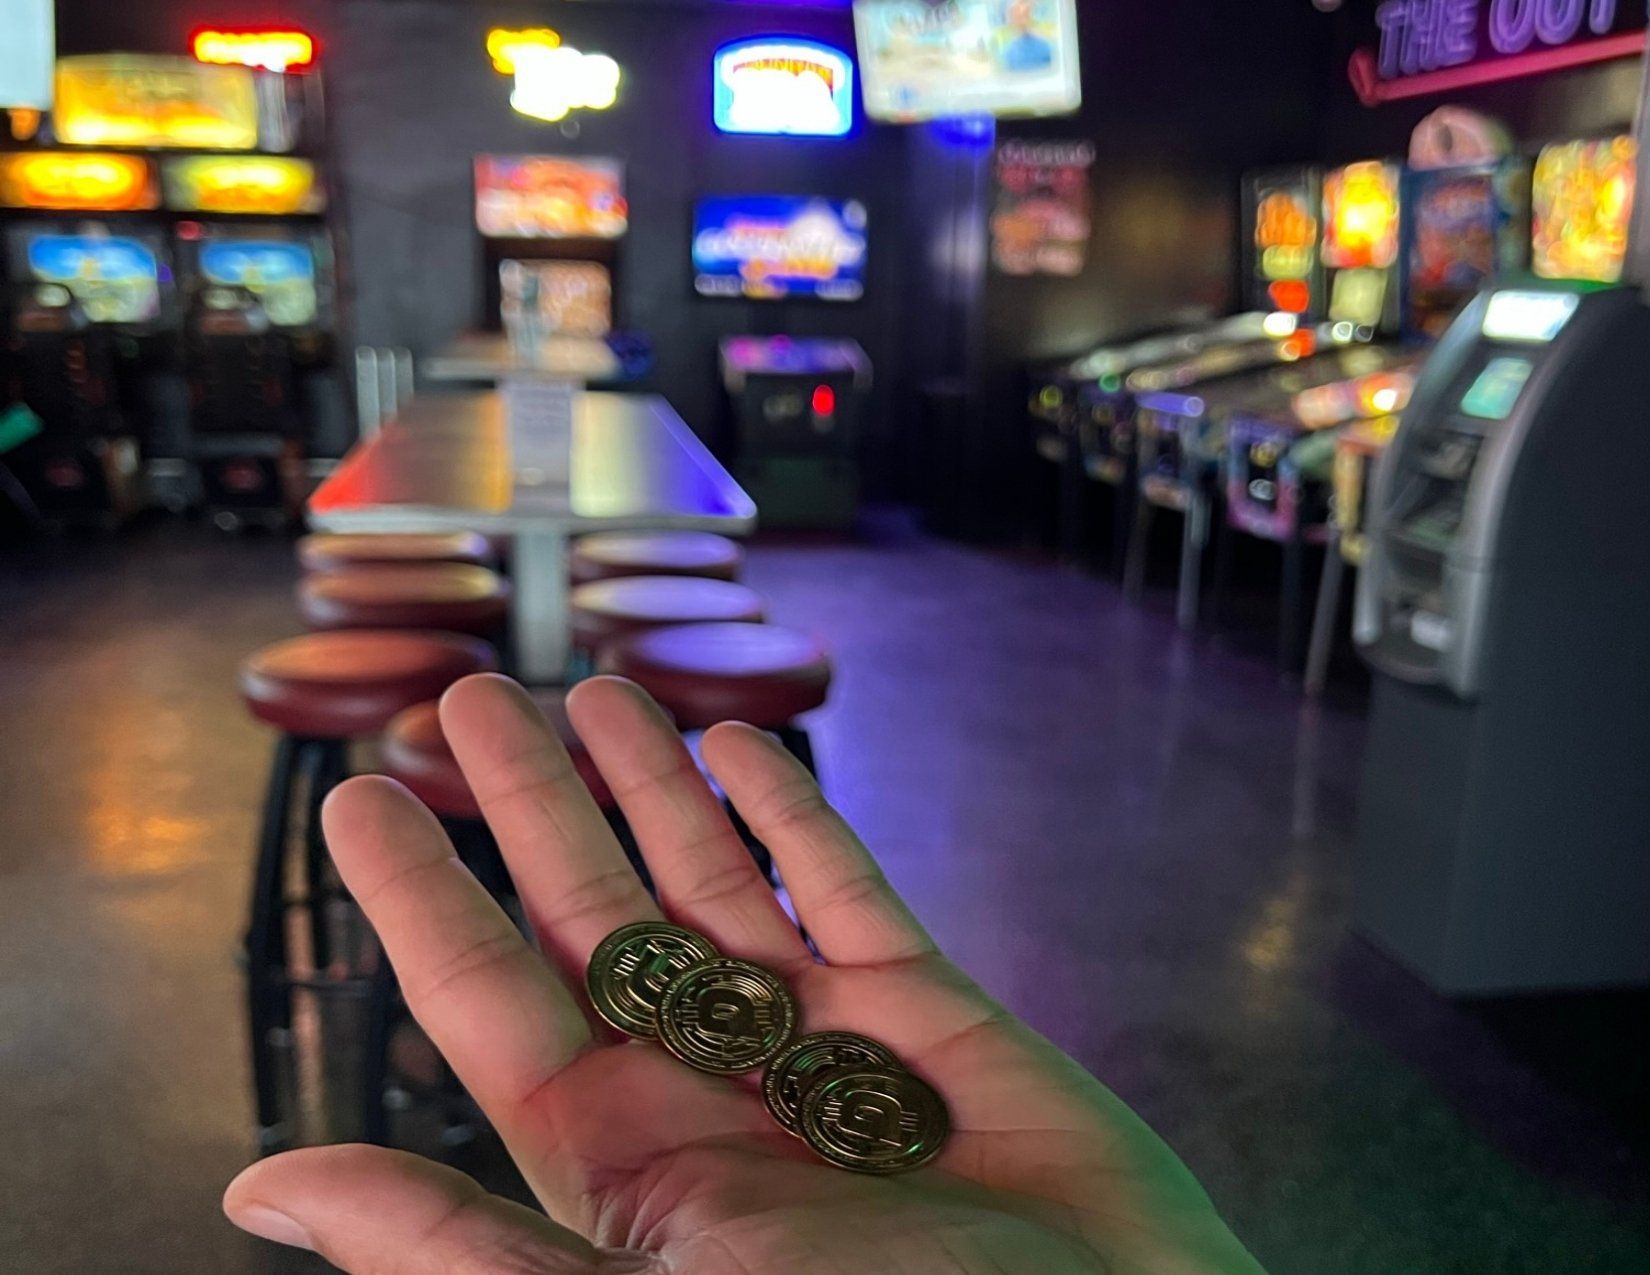 a hand holding coins to use for arcade games at an arcade bar in Lake Havasu City, Arizona